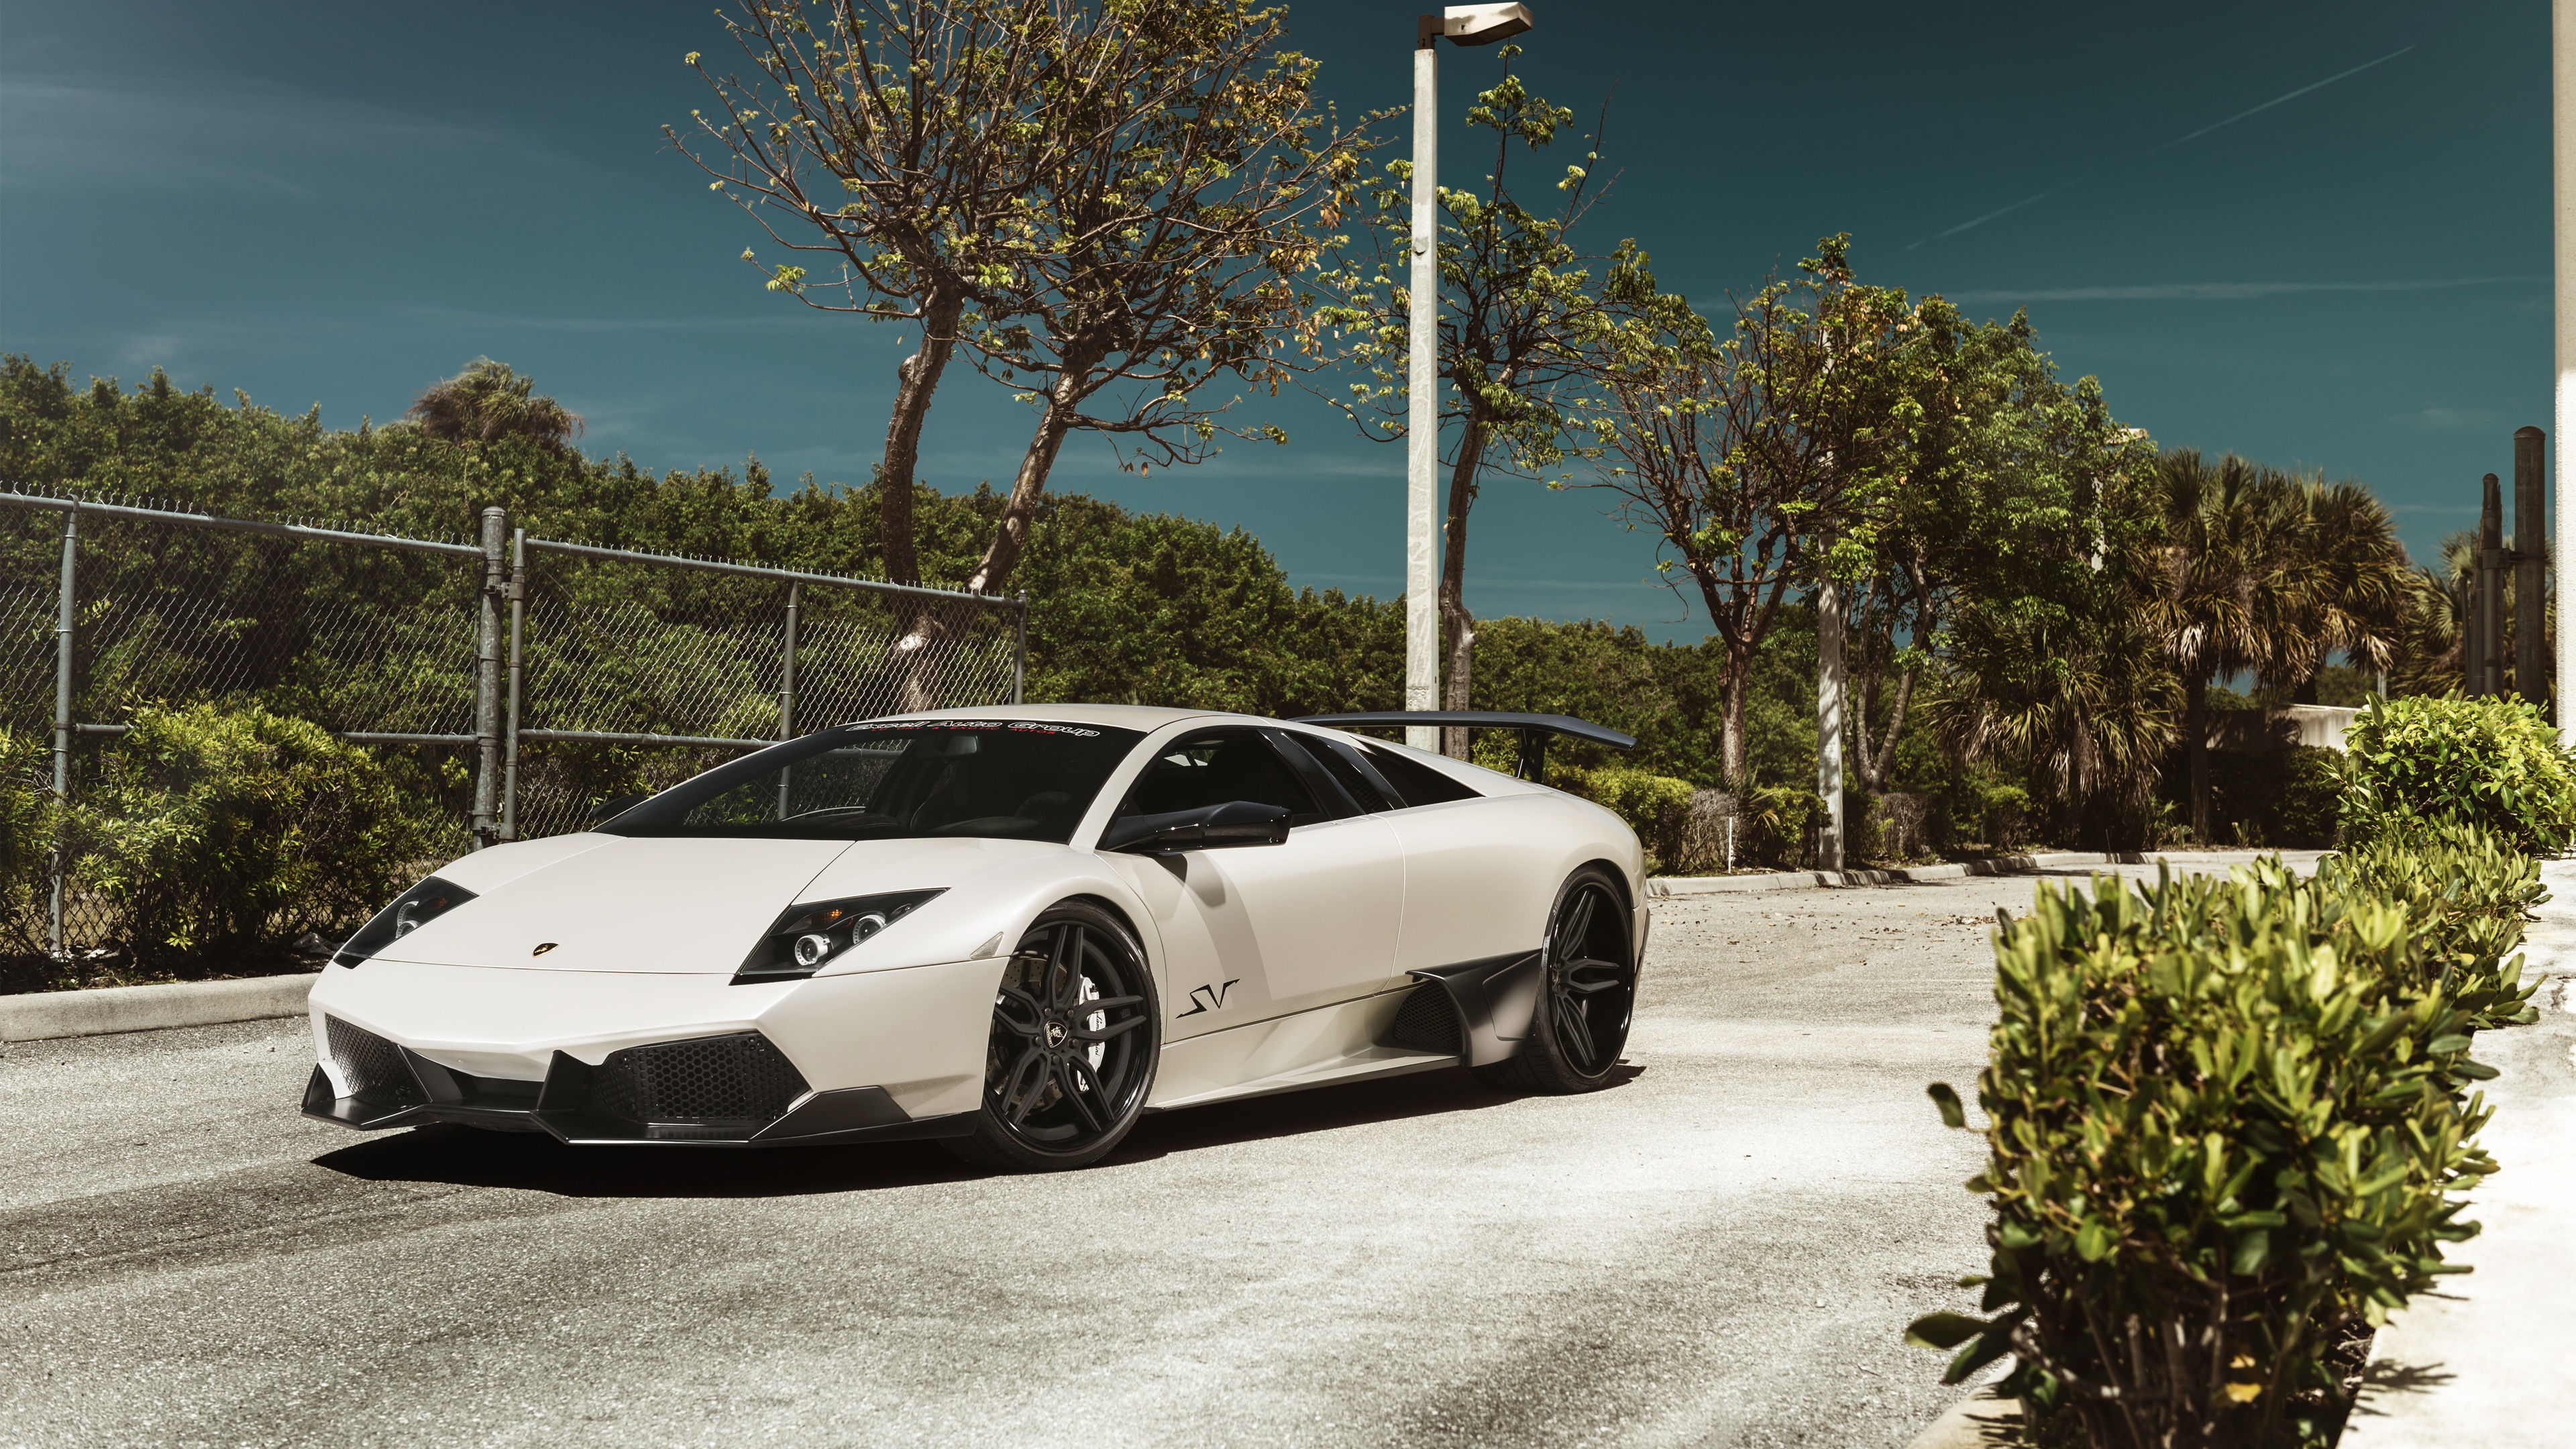 Lamborghini Murciélago 4k Ultra HD Wallpaper | Background ...